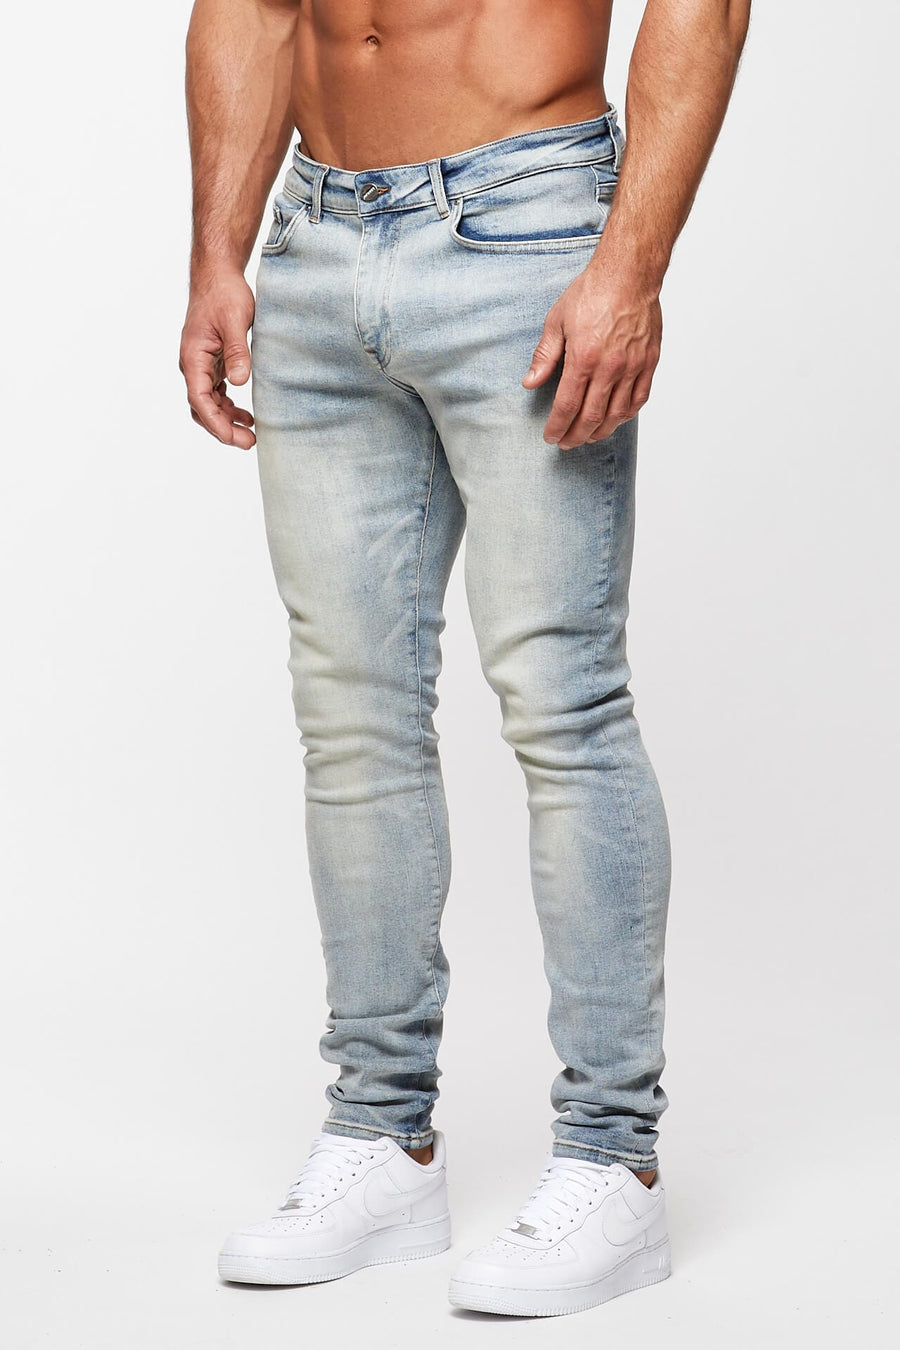 Legend London Jeans SKINNY FIT JEANS - SAND WASH BLUE OVERDYE